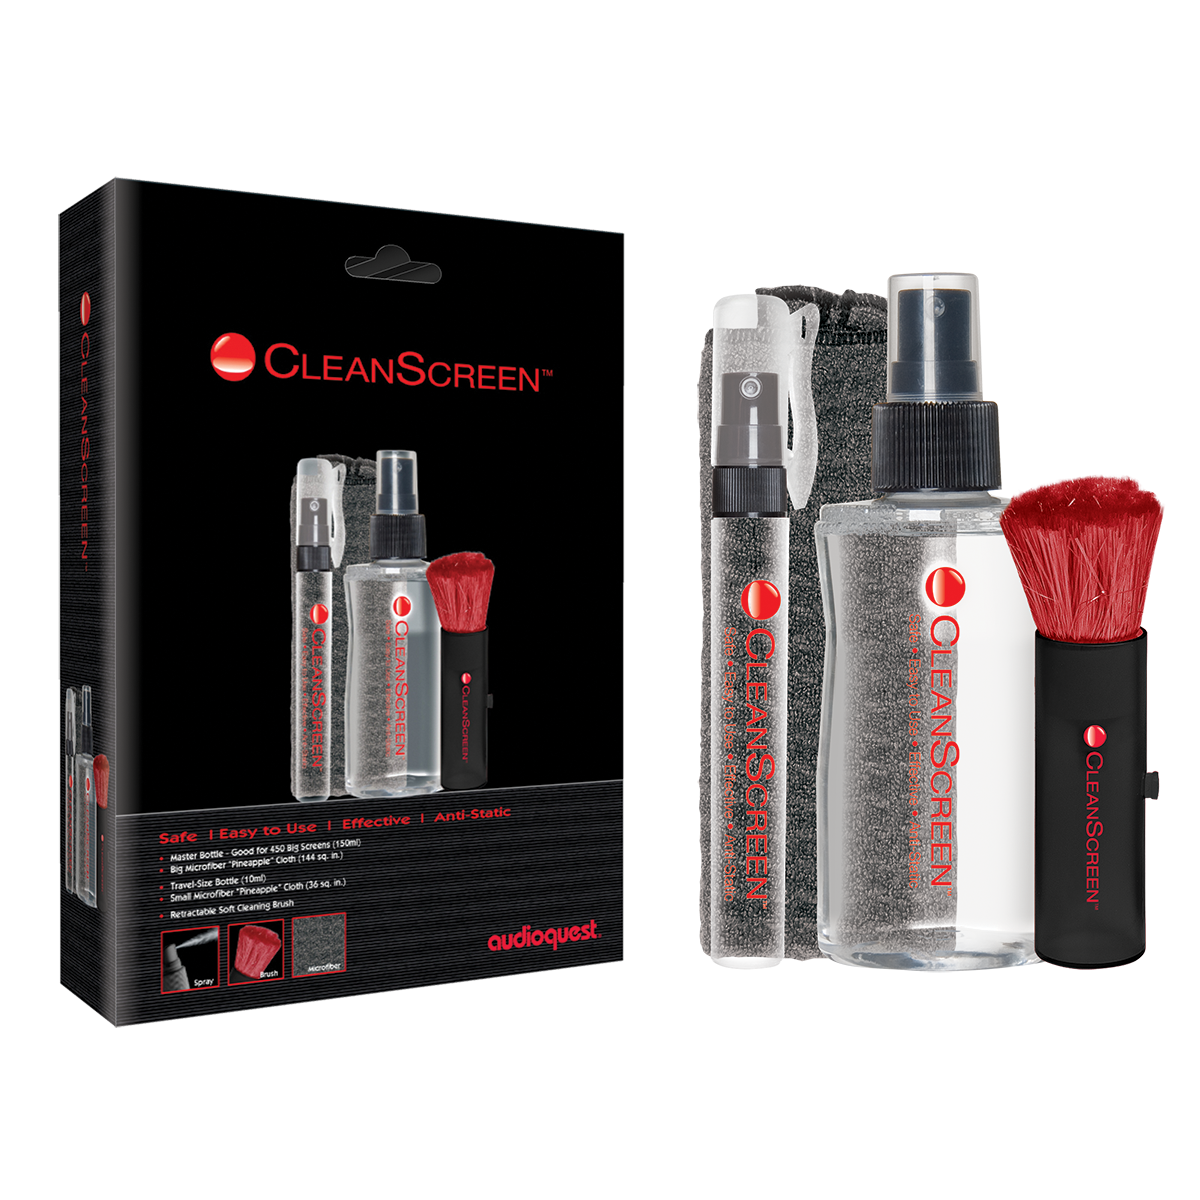 Audioquest Cleanscreen Kit